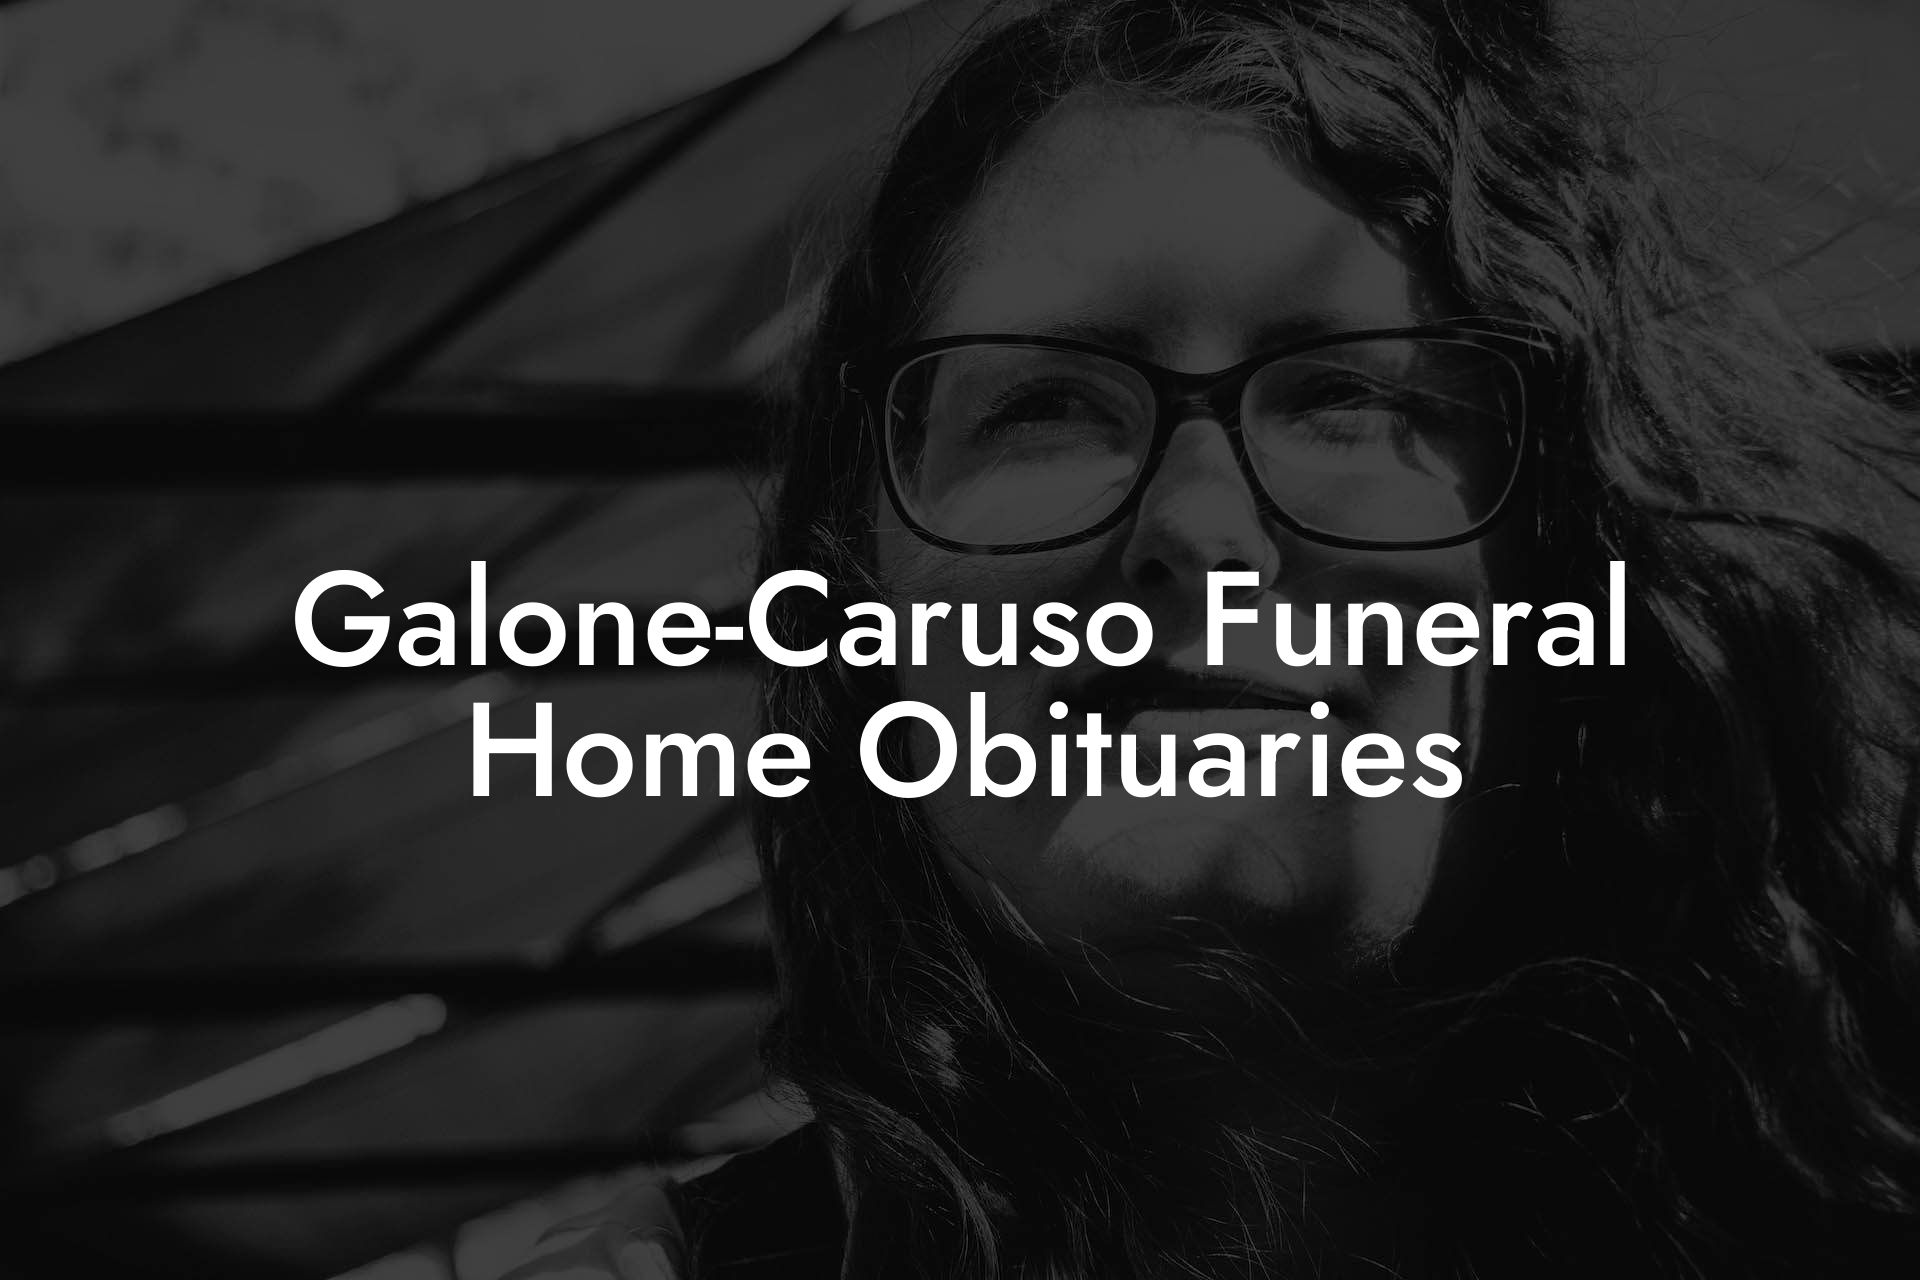 Galone-Caruso Funeral Home Obituaries